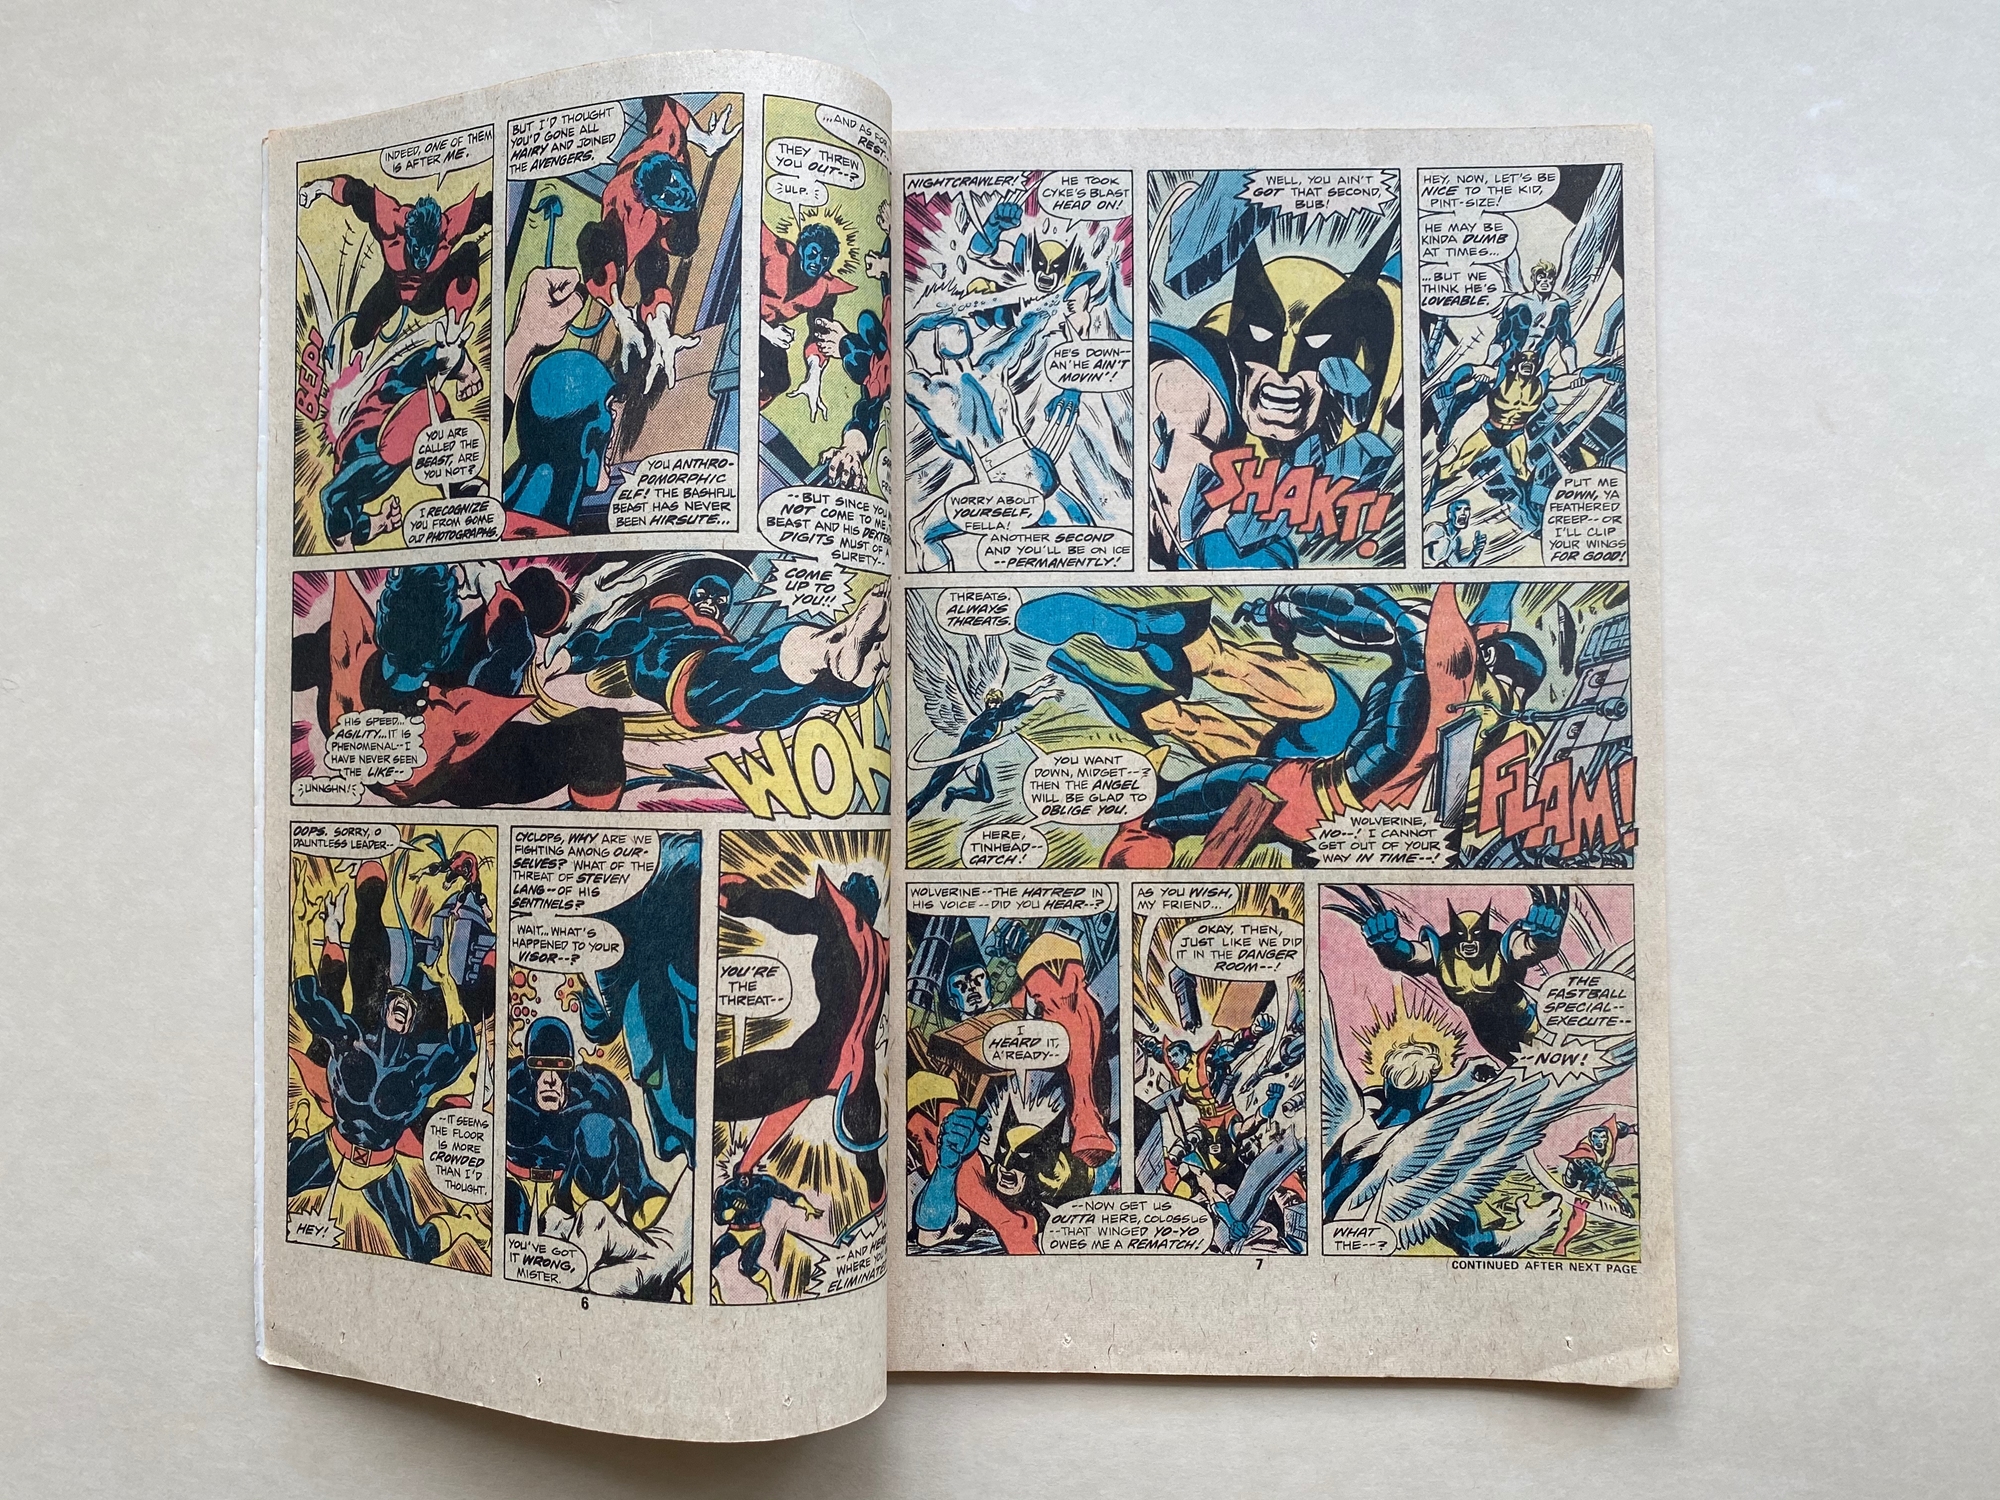 UNCANNY X-MEN #100 - (1976 - MARVEL - Pence Copy) - The original X-Men vs. the new X-Men. Partial - Image 6 of 9